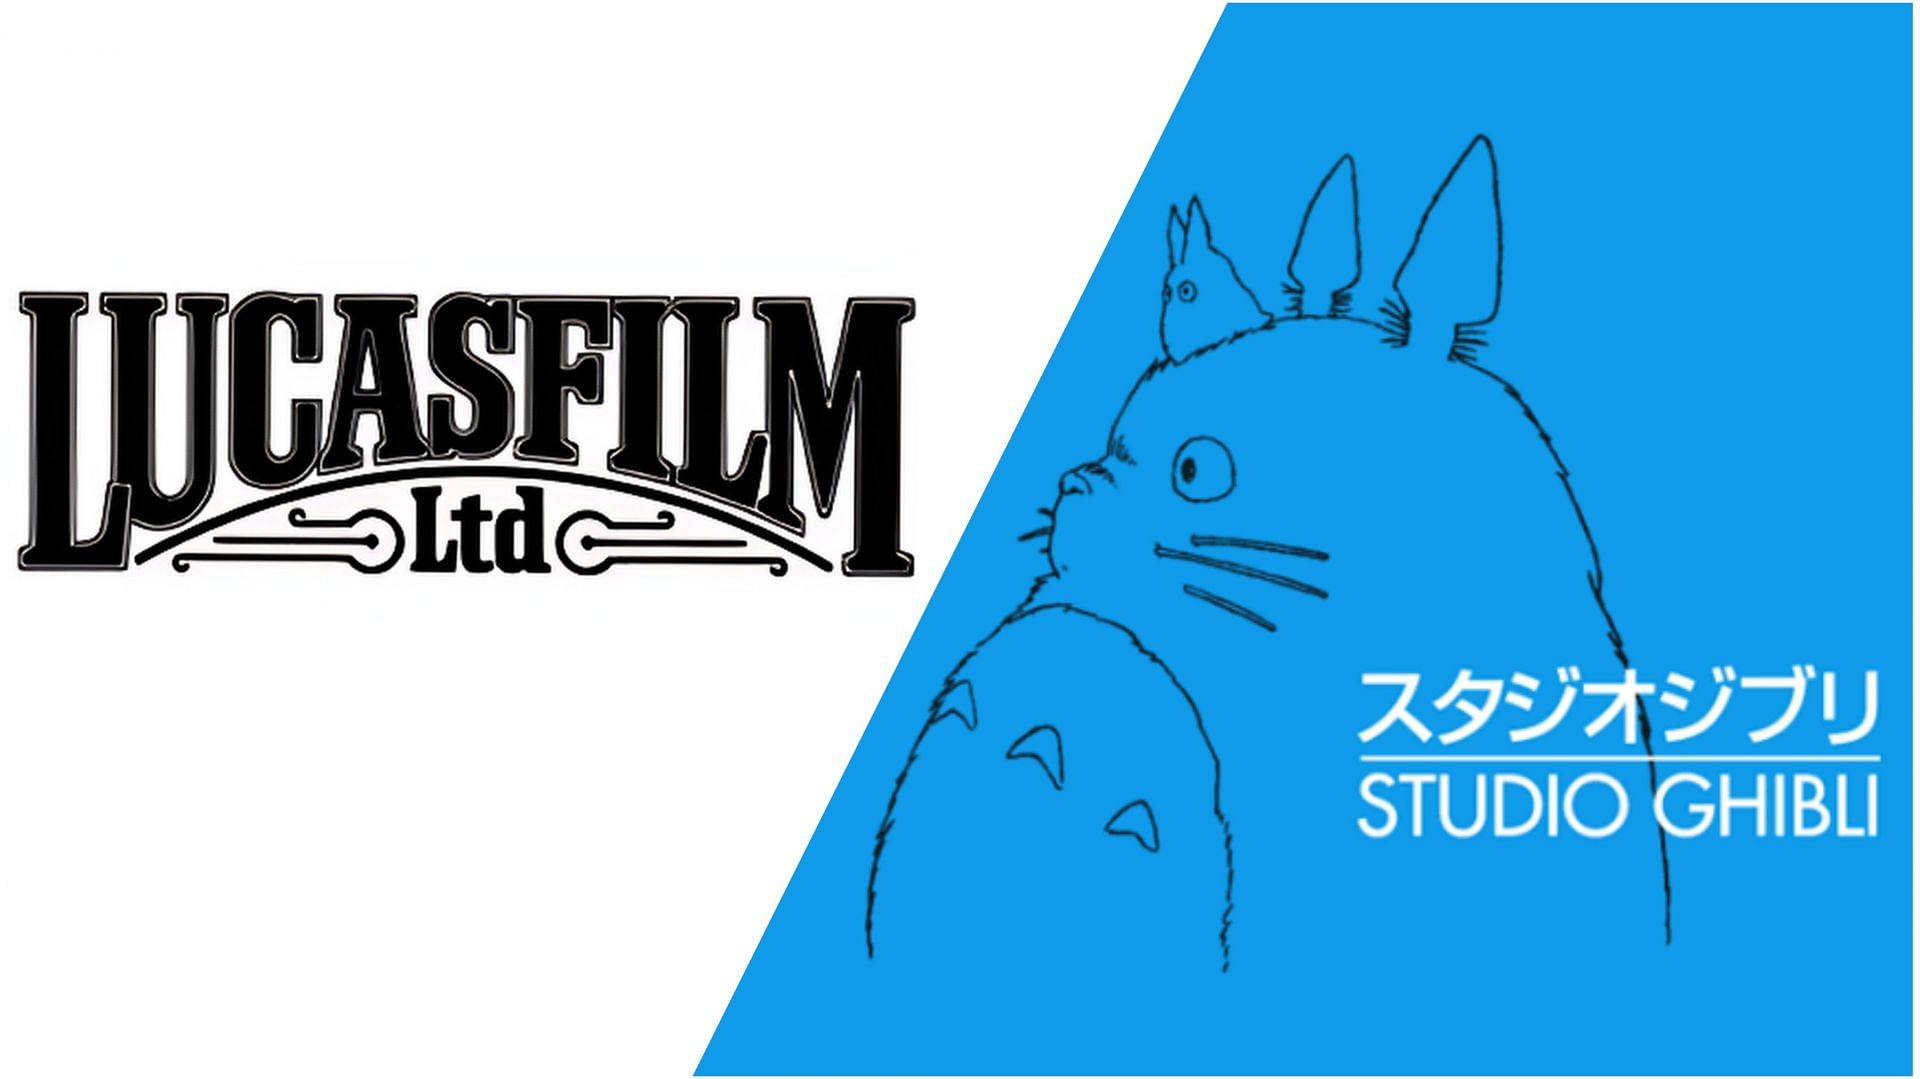 Studio Ghibli announces collaboration with Star Wars&rsquo; Lucasfilm (Image via Sportskeeda)